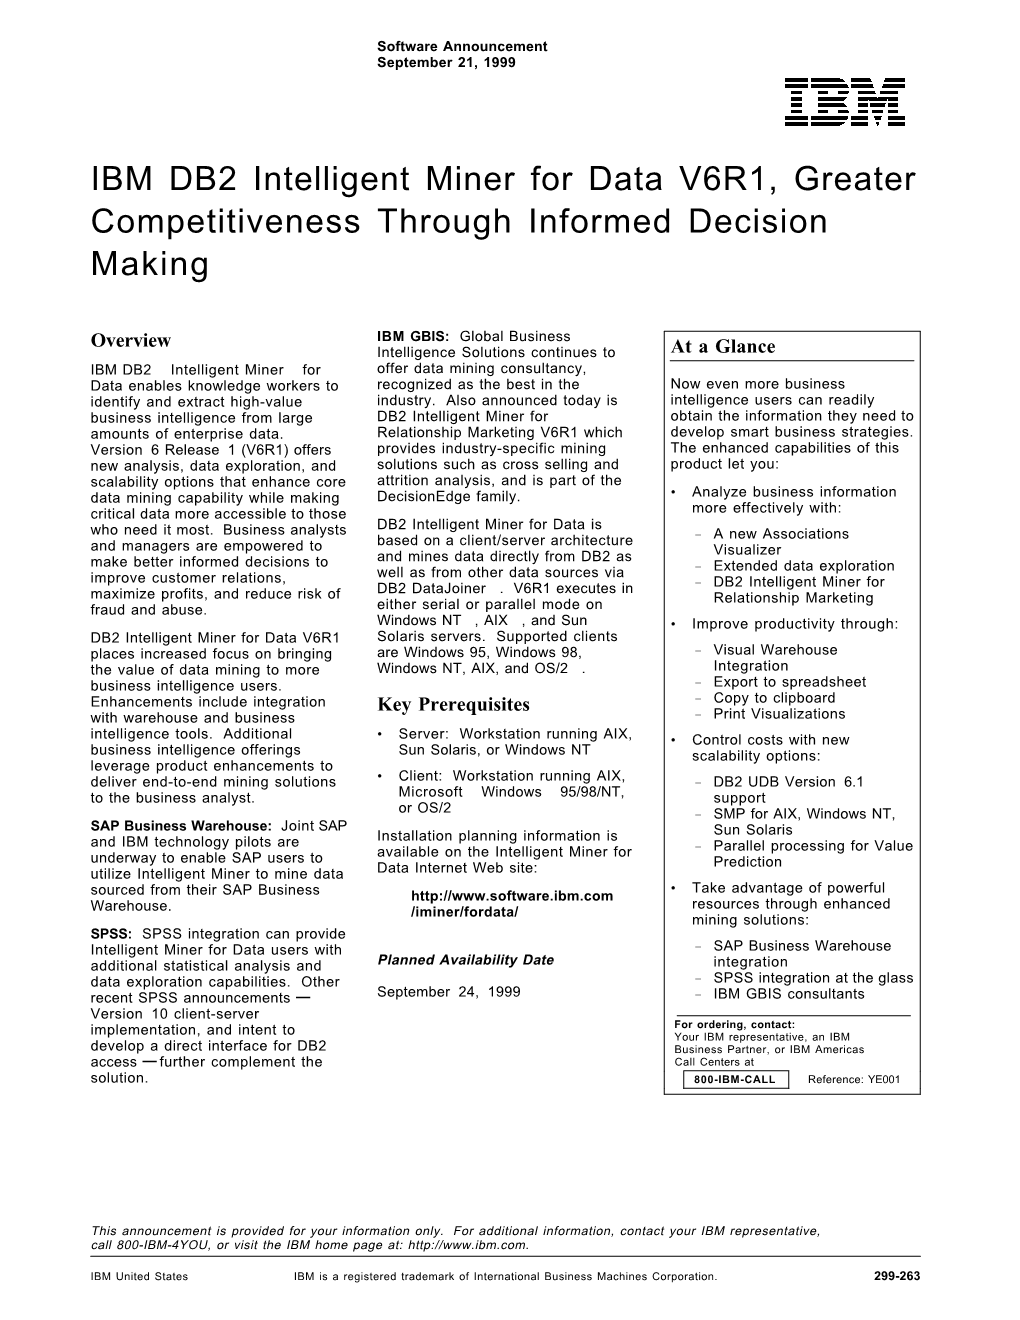 IBM DB2 Intelligent Miner for Data V6R1, Greater Competitiveness Through Informed Decision Making